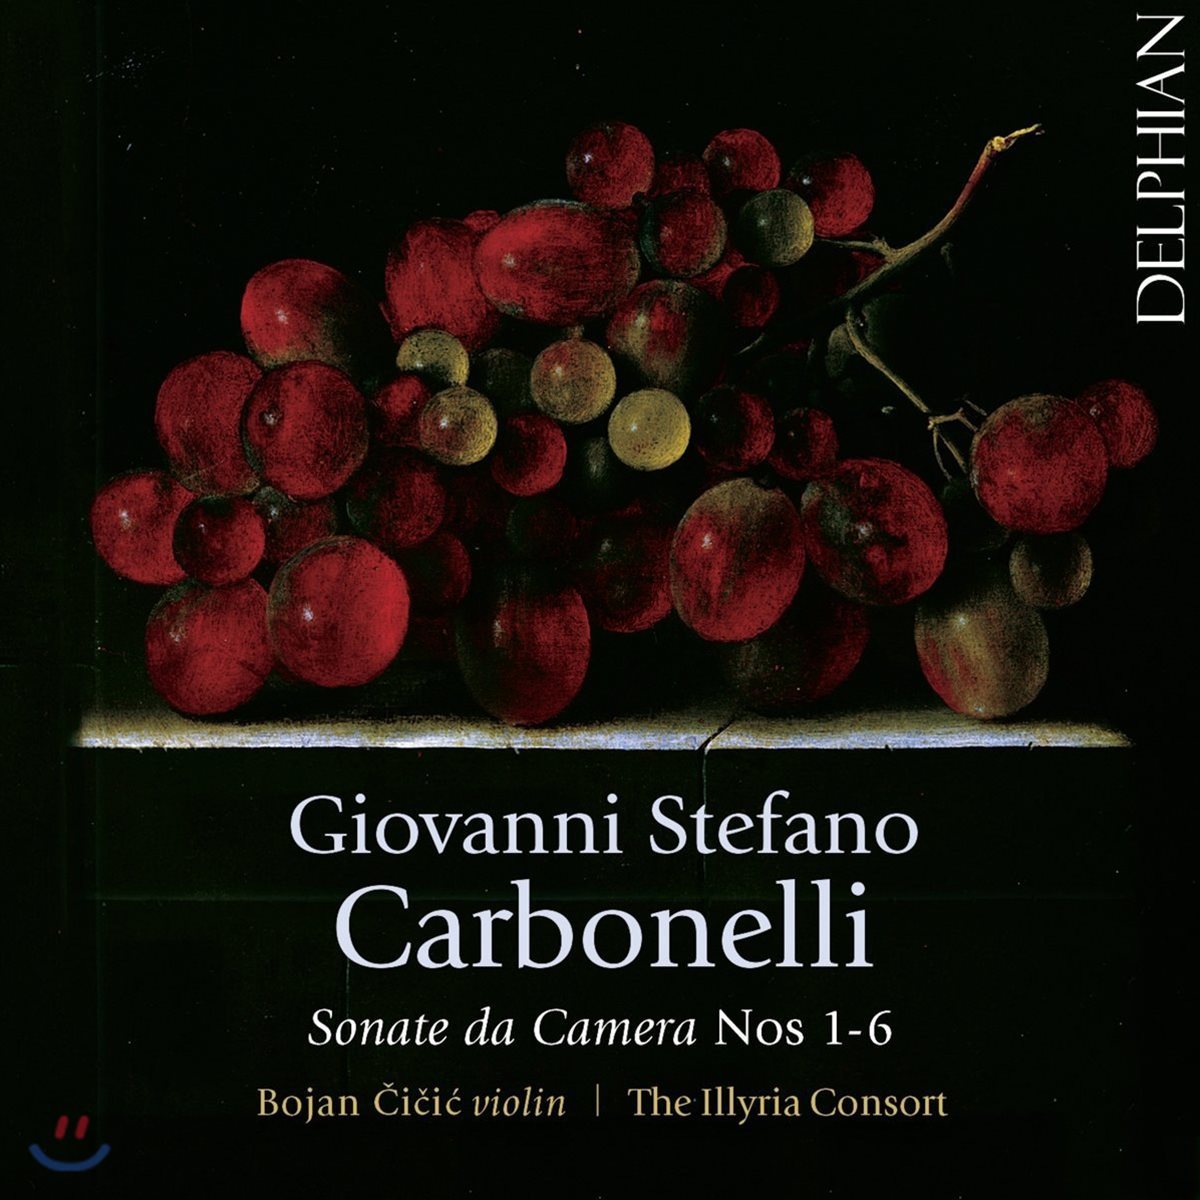 Bojan Cicic 지오반니 스테파노 카르보넬리: 실내 소나타 1-6번 - 일리리아 콘소트, 보얀 치치치 (Giovanni Stefano Carbonelli: Sonate Da Camera Nos. 1-6)